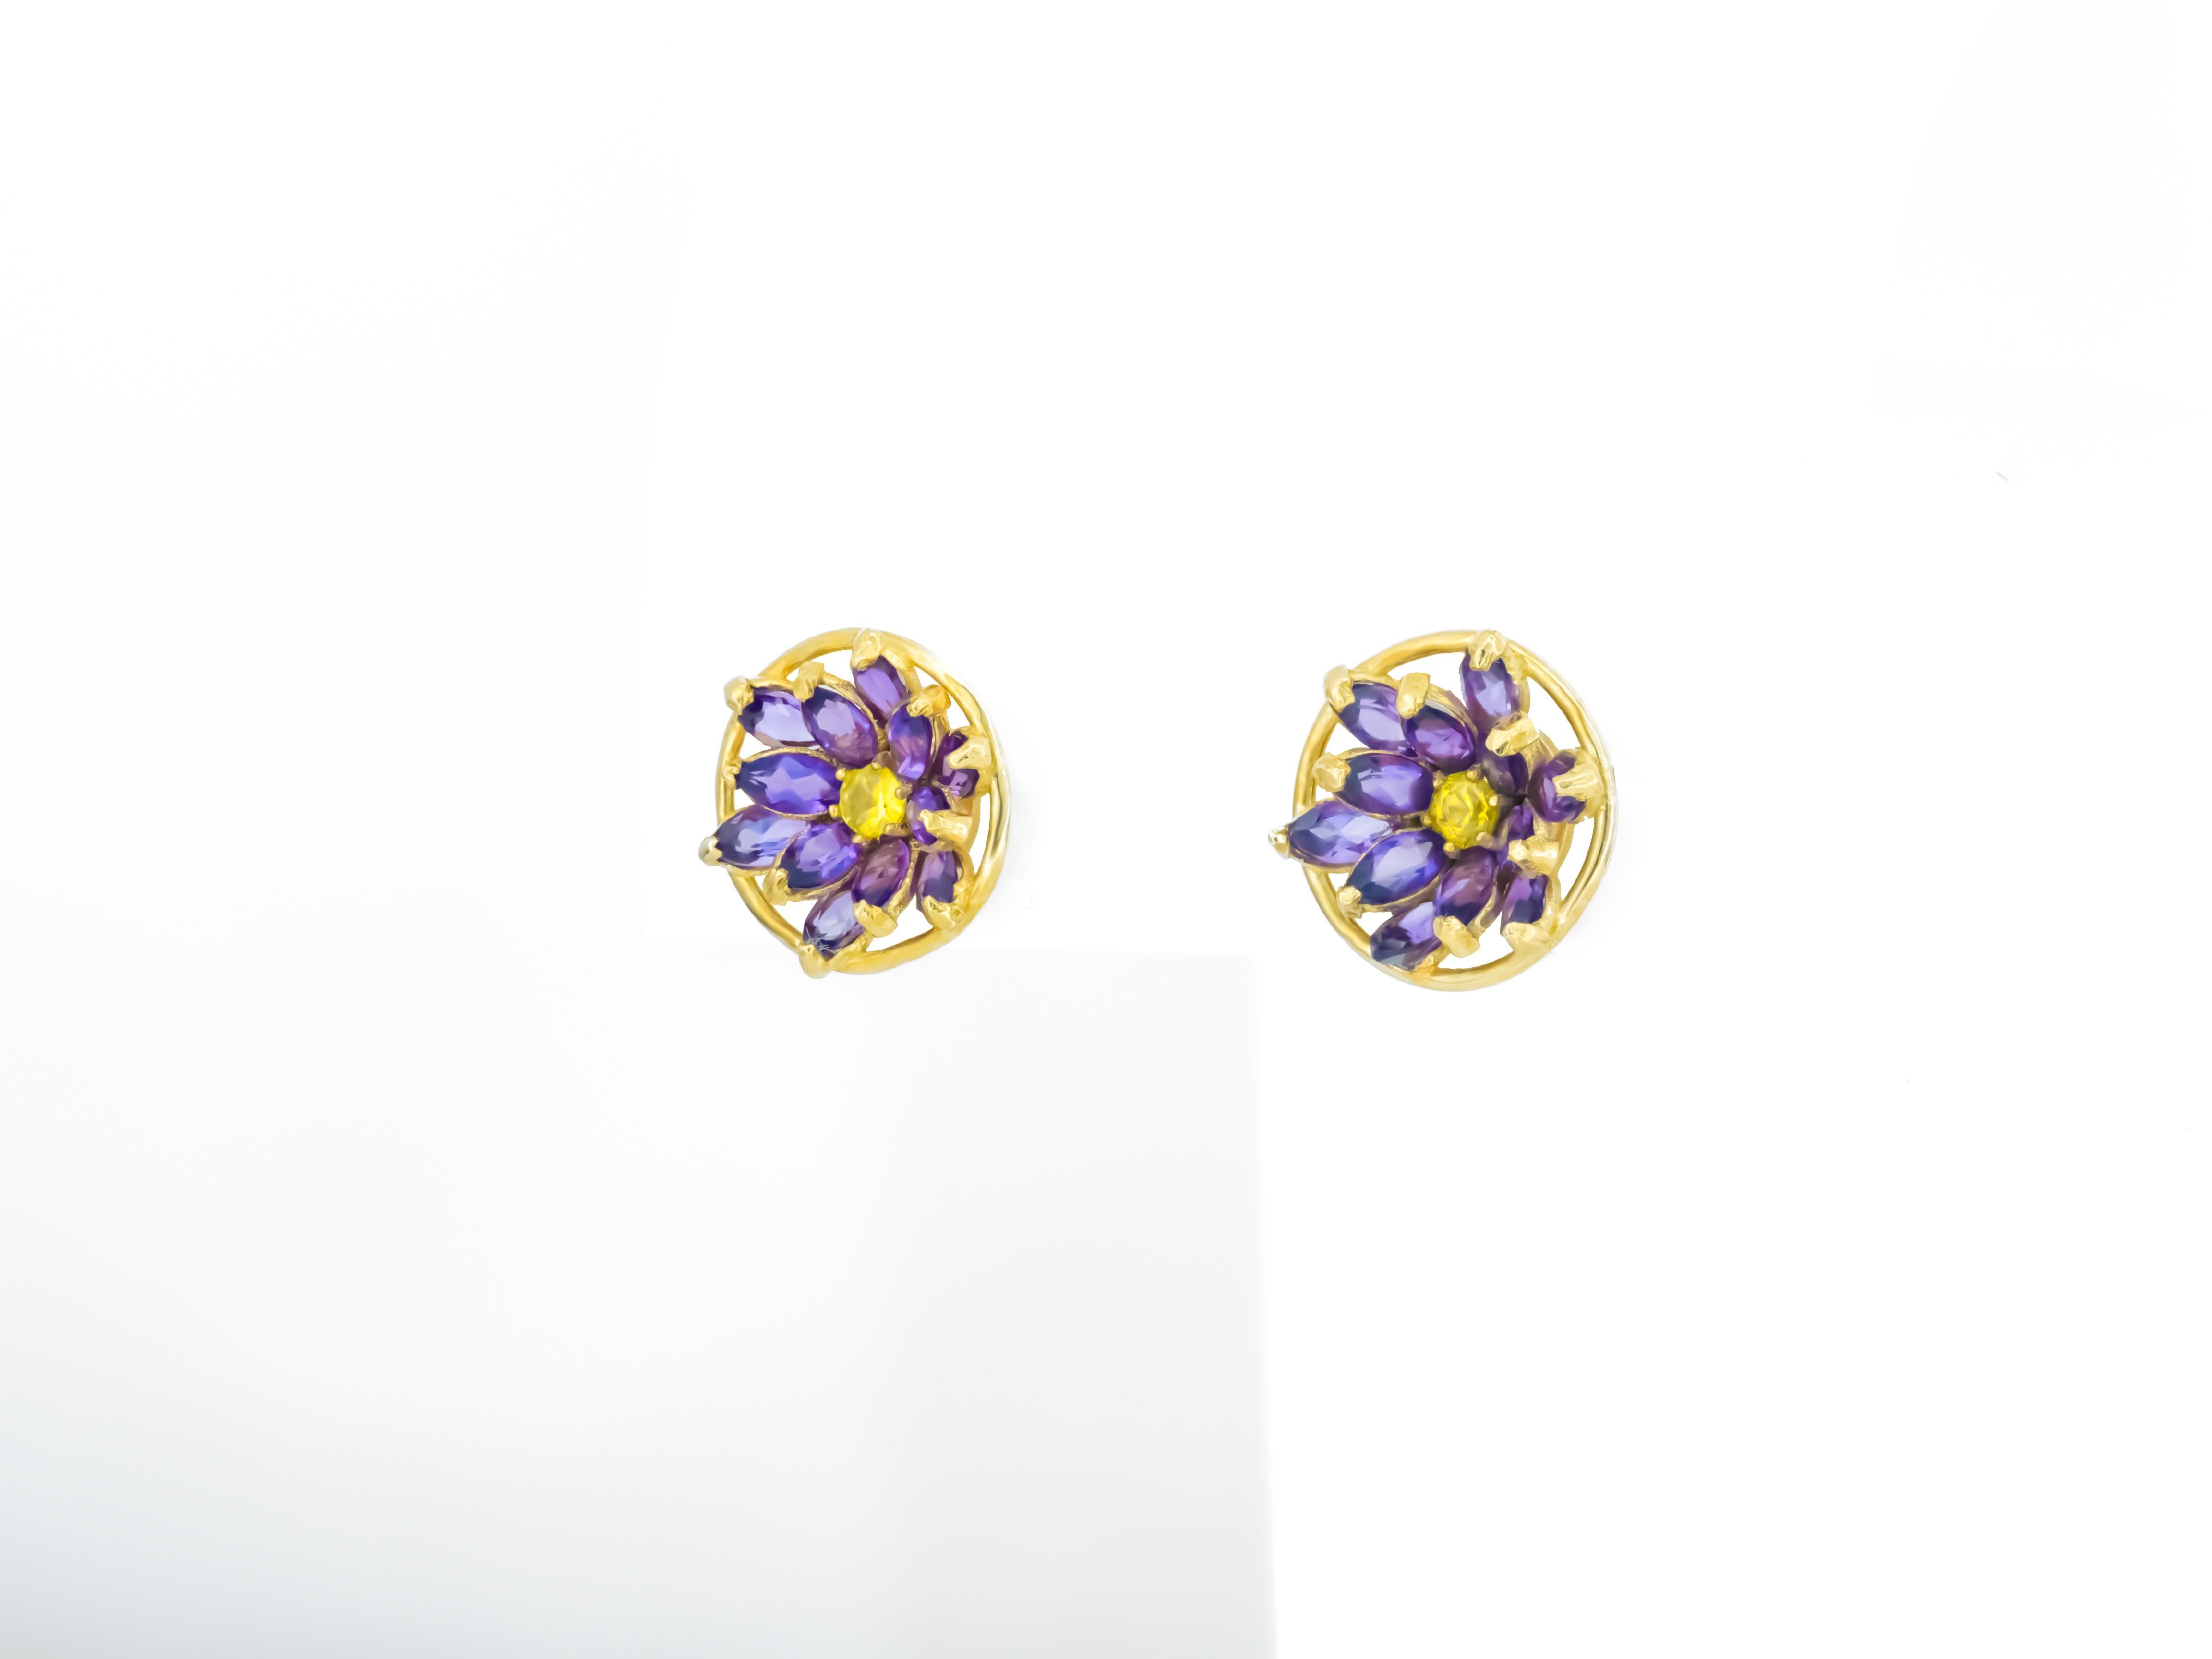 Lotus Flower Earrings Studs in 14k Gold, Amethyst and Sapphires Earrings For Sale 1